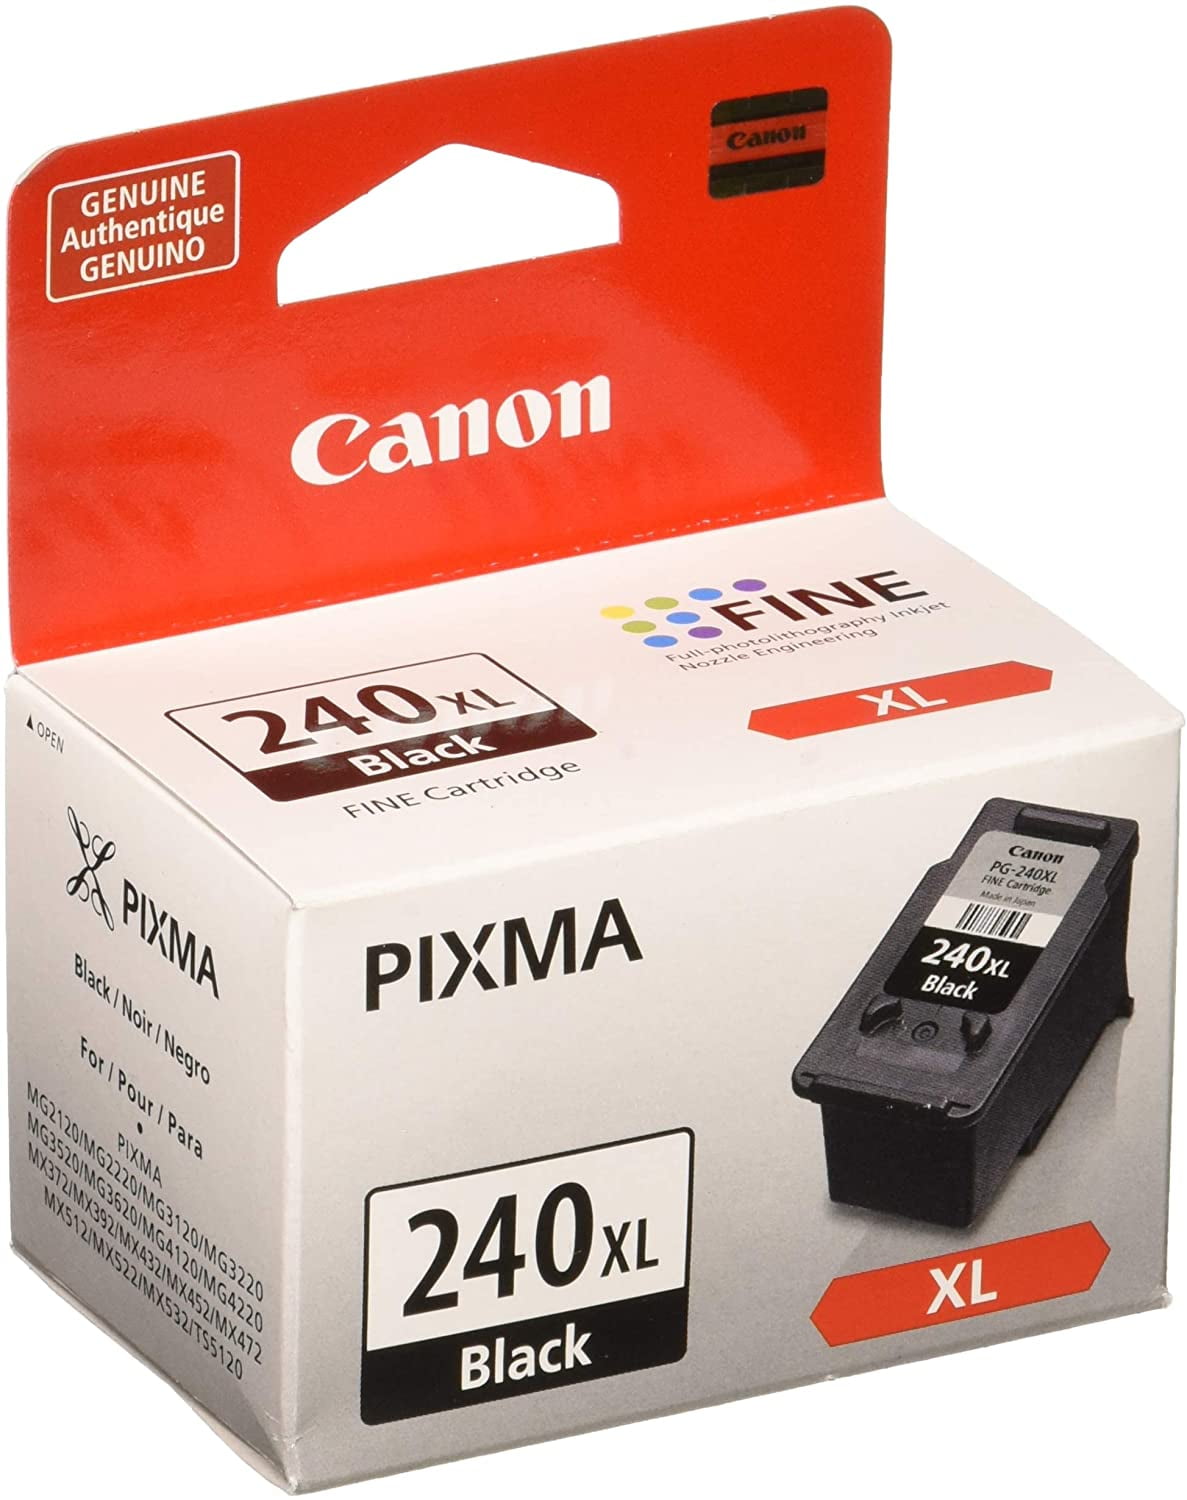 2PK PG 240XL Black Ink cartridge Fit For Canon Pixma MX452 MX459 MX522 MG3520 